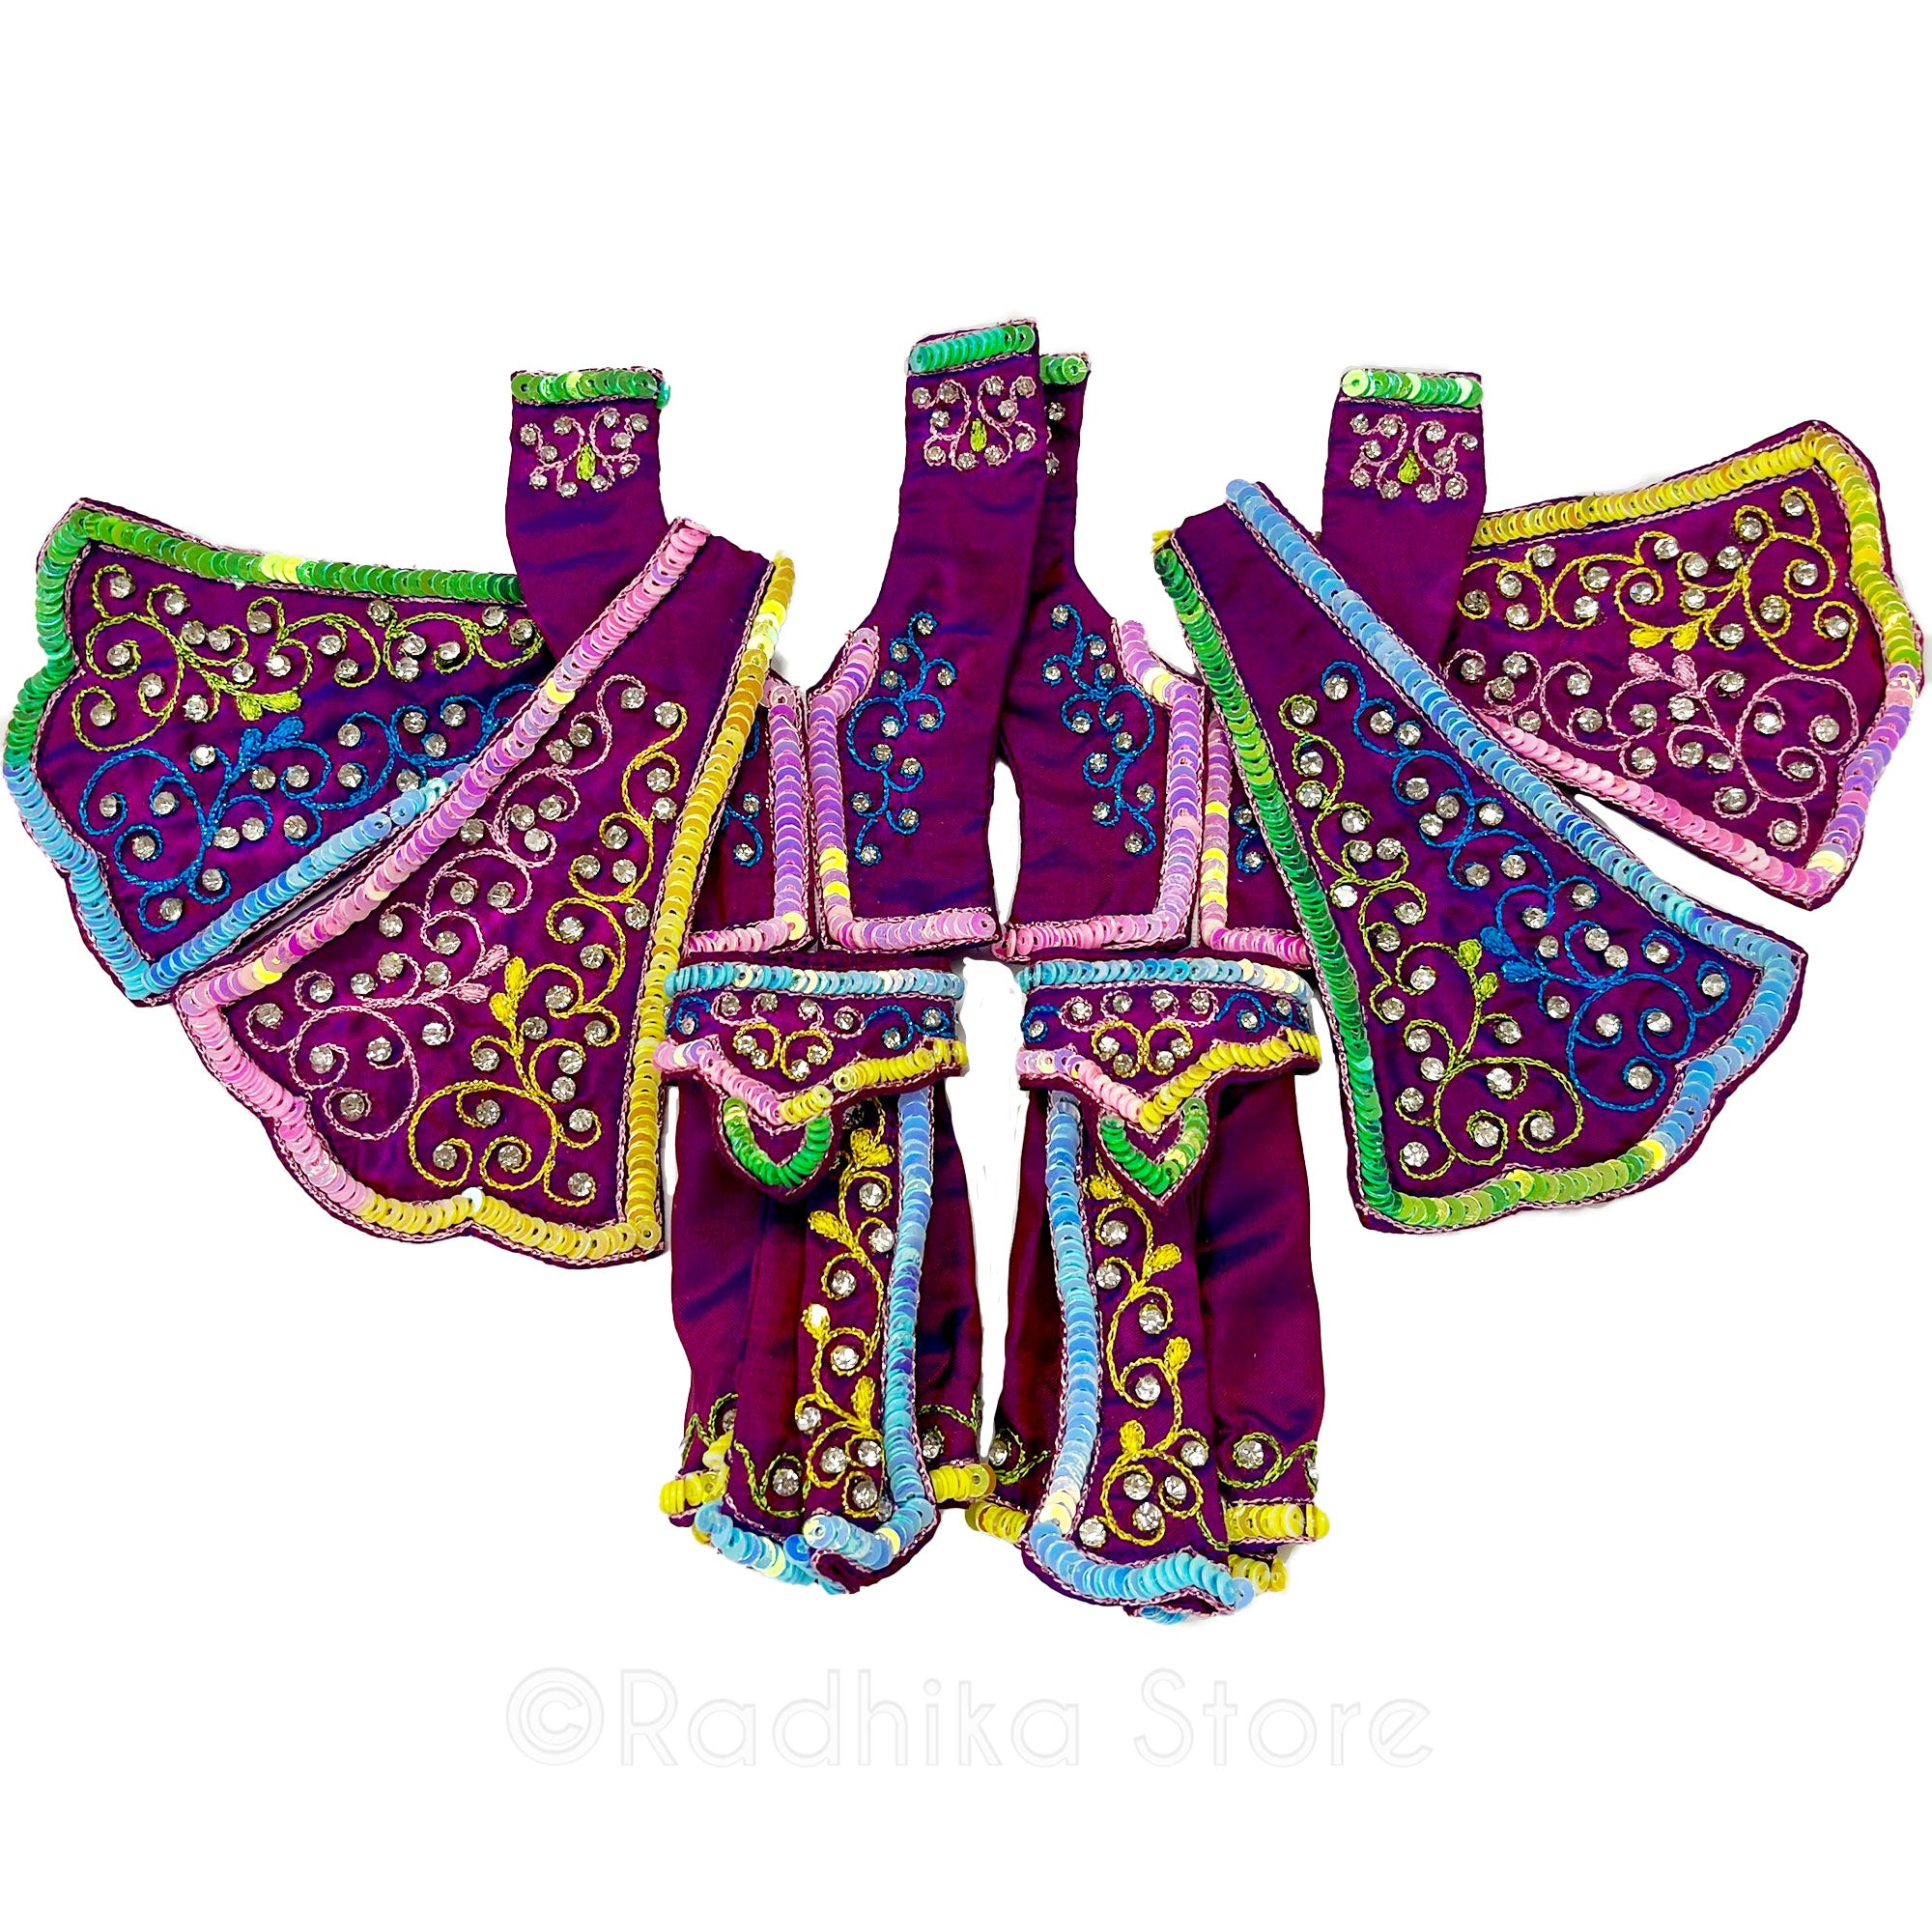 Transcendental Fireworks - All Silk - Purple - Gaura Nitai Deity Outfit